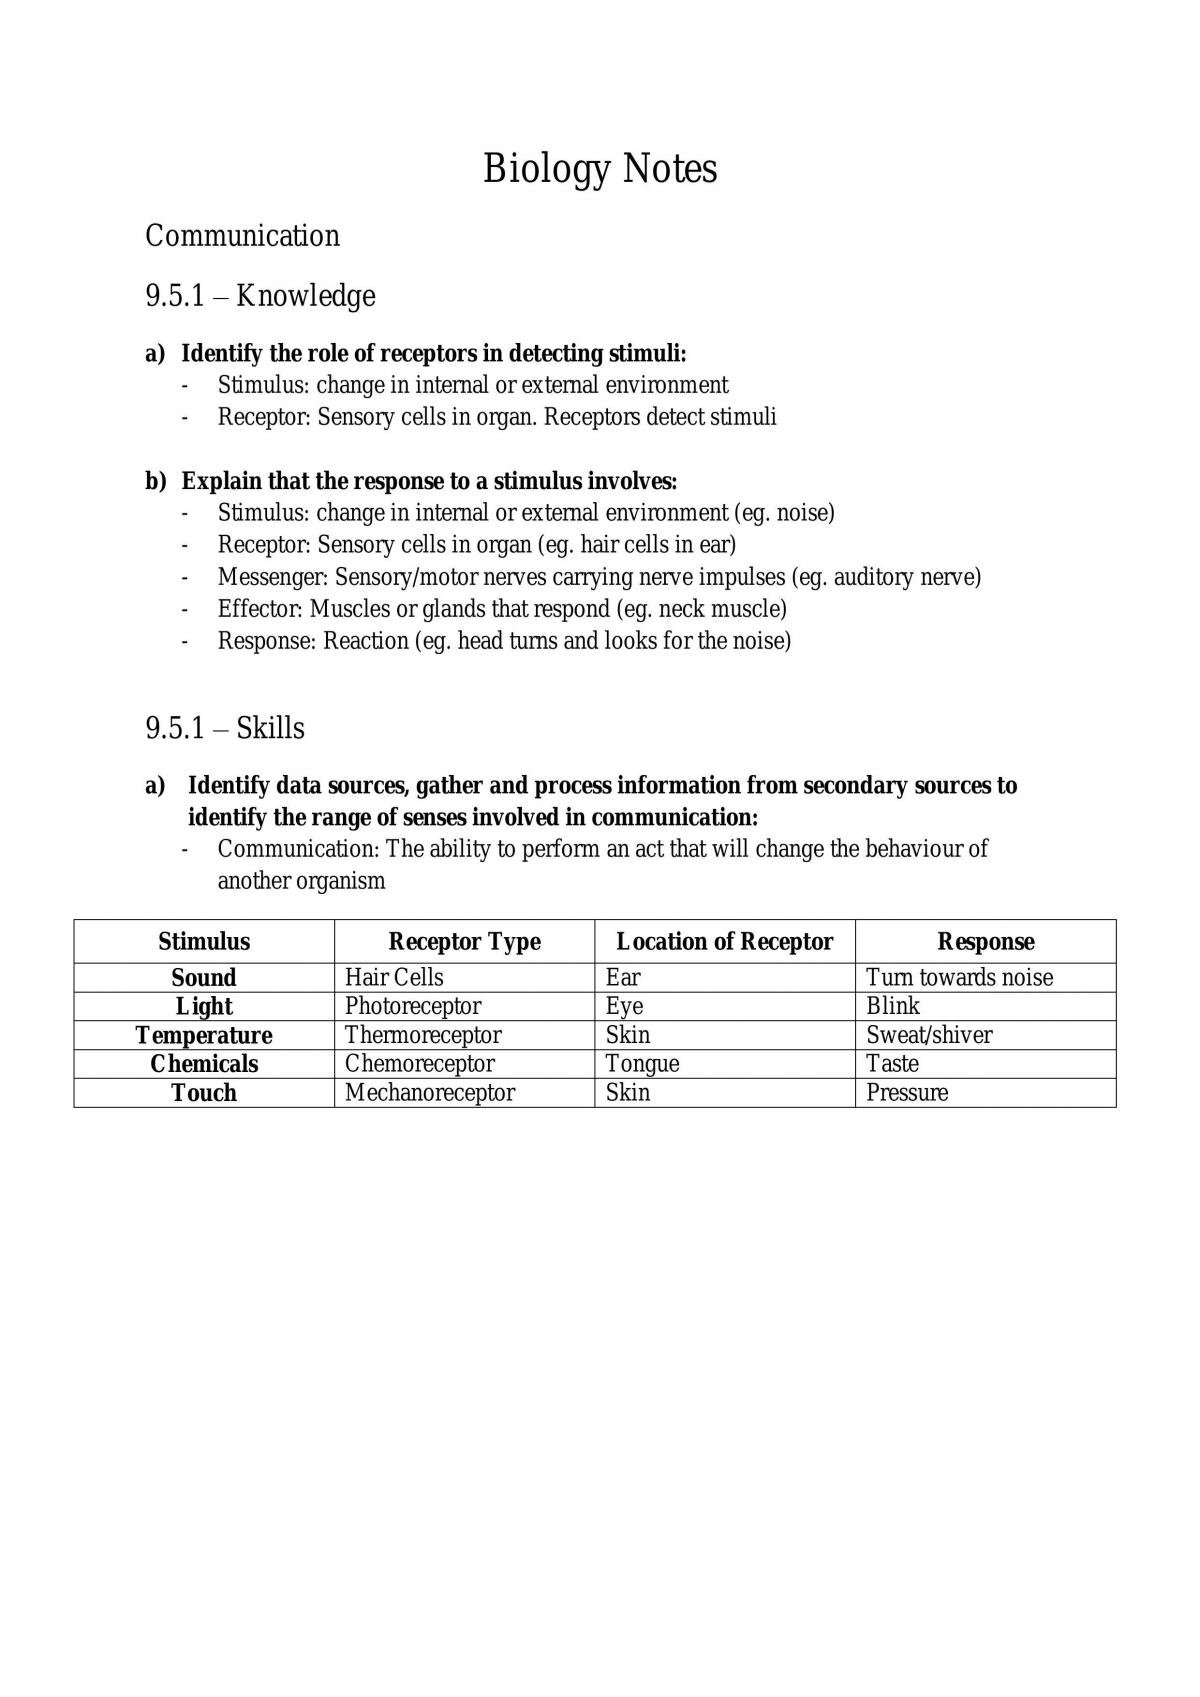 HSC Biology Elective Notes - Communication - Page 1